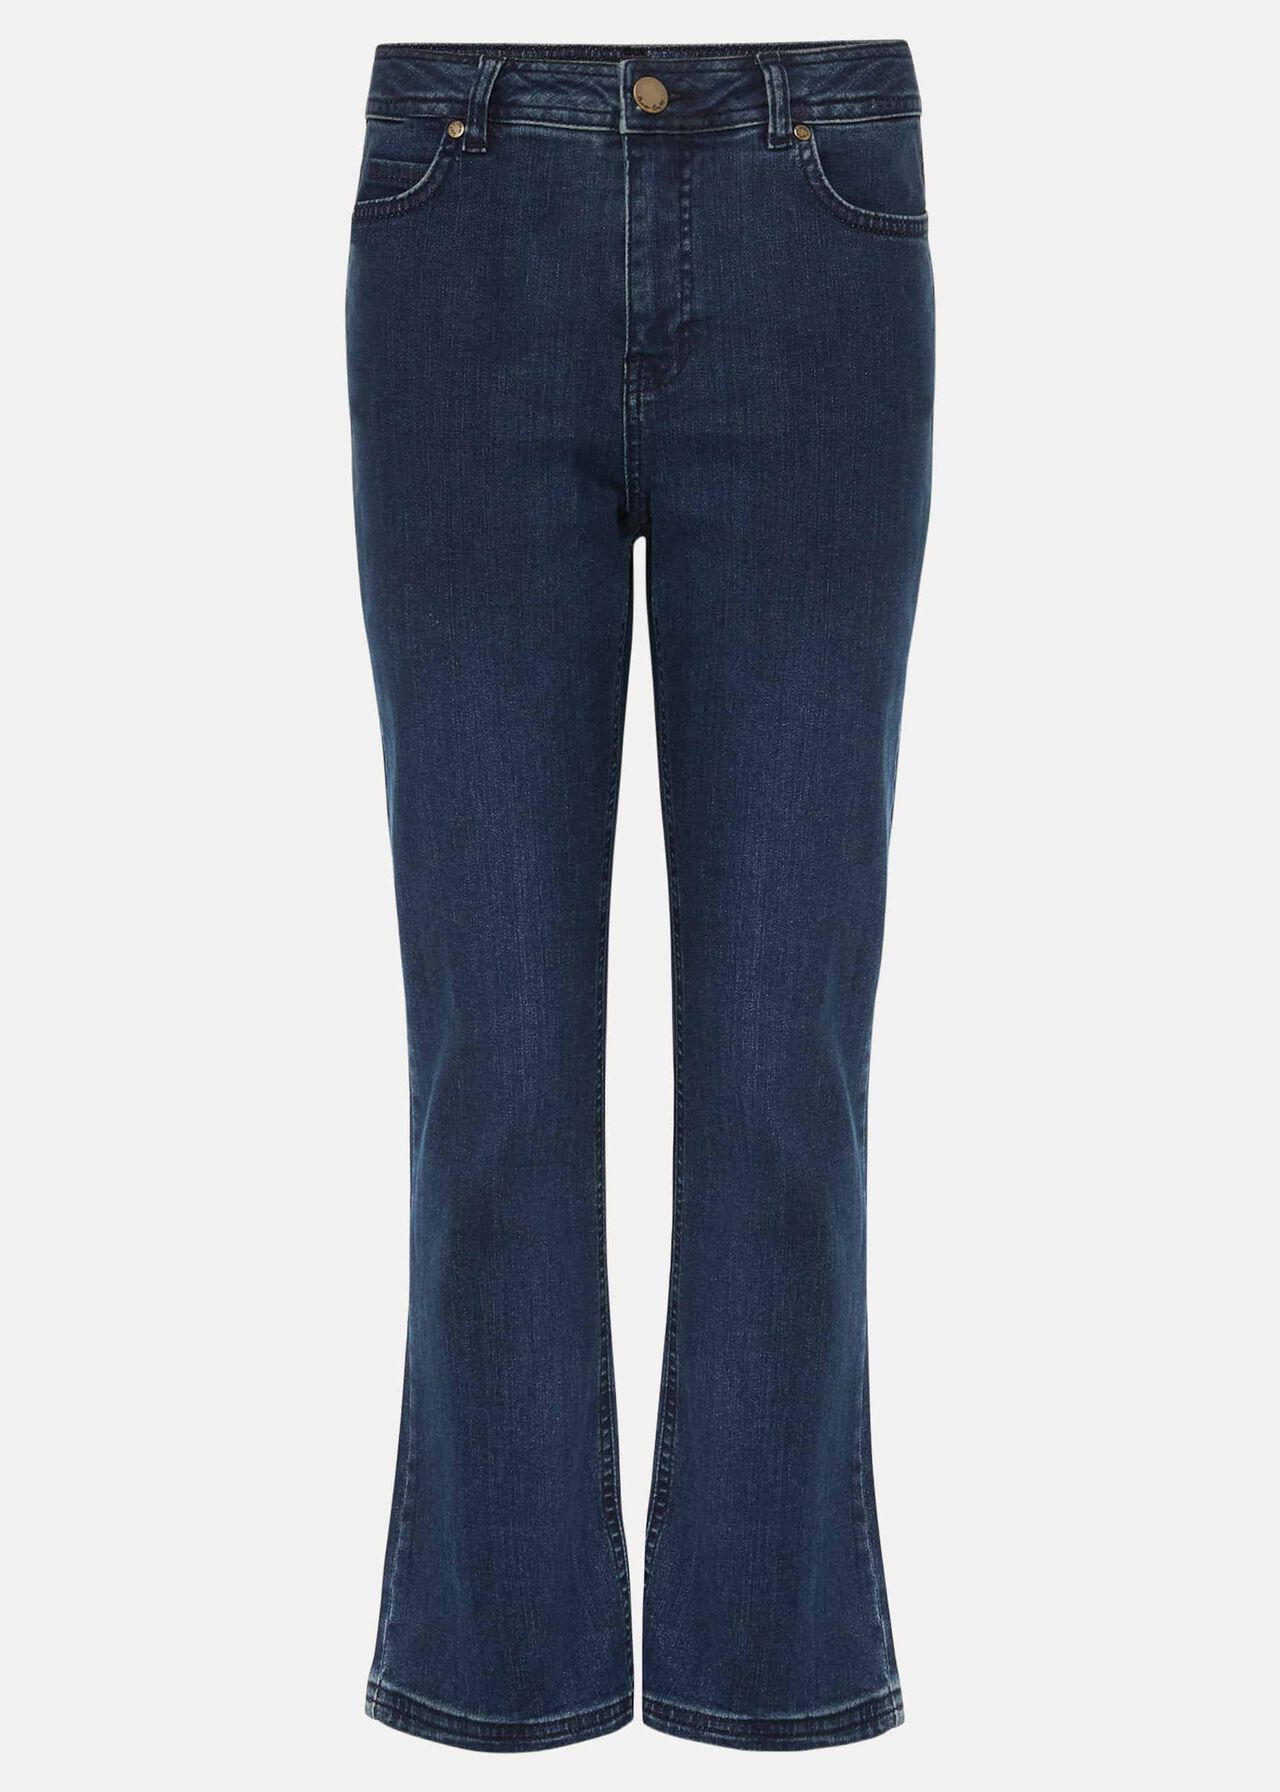 Elsie Cropped Kick Flare Jeans